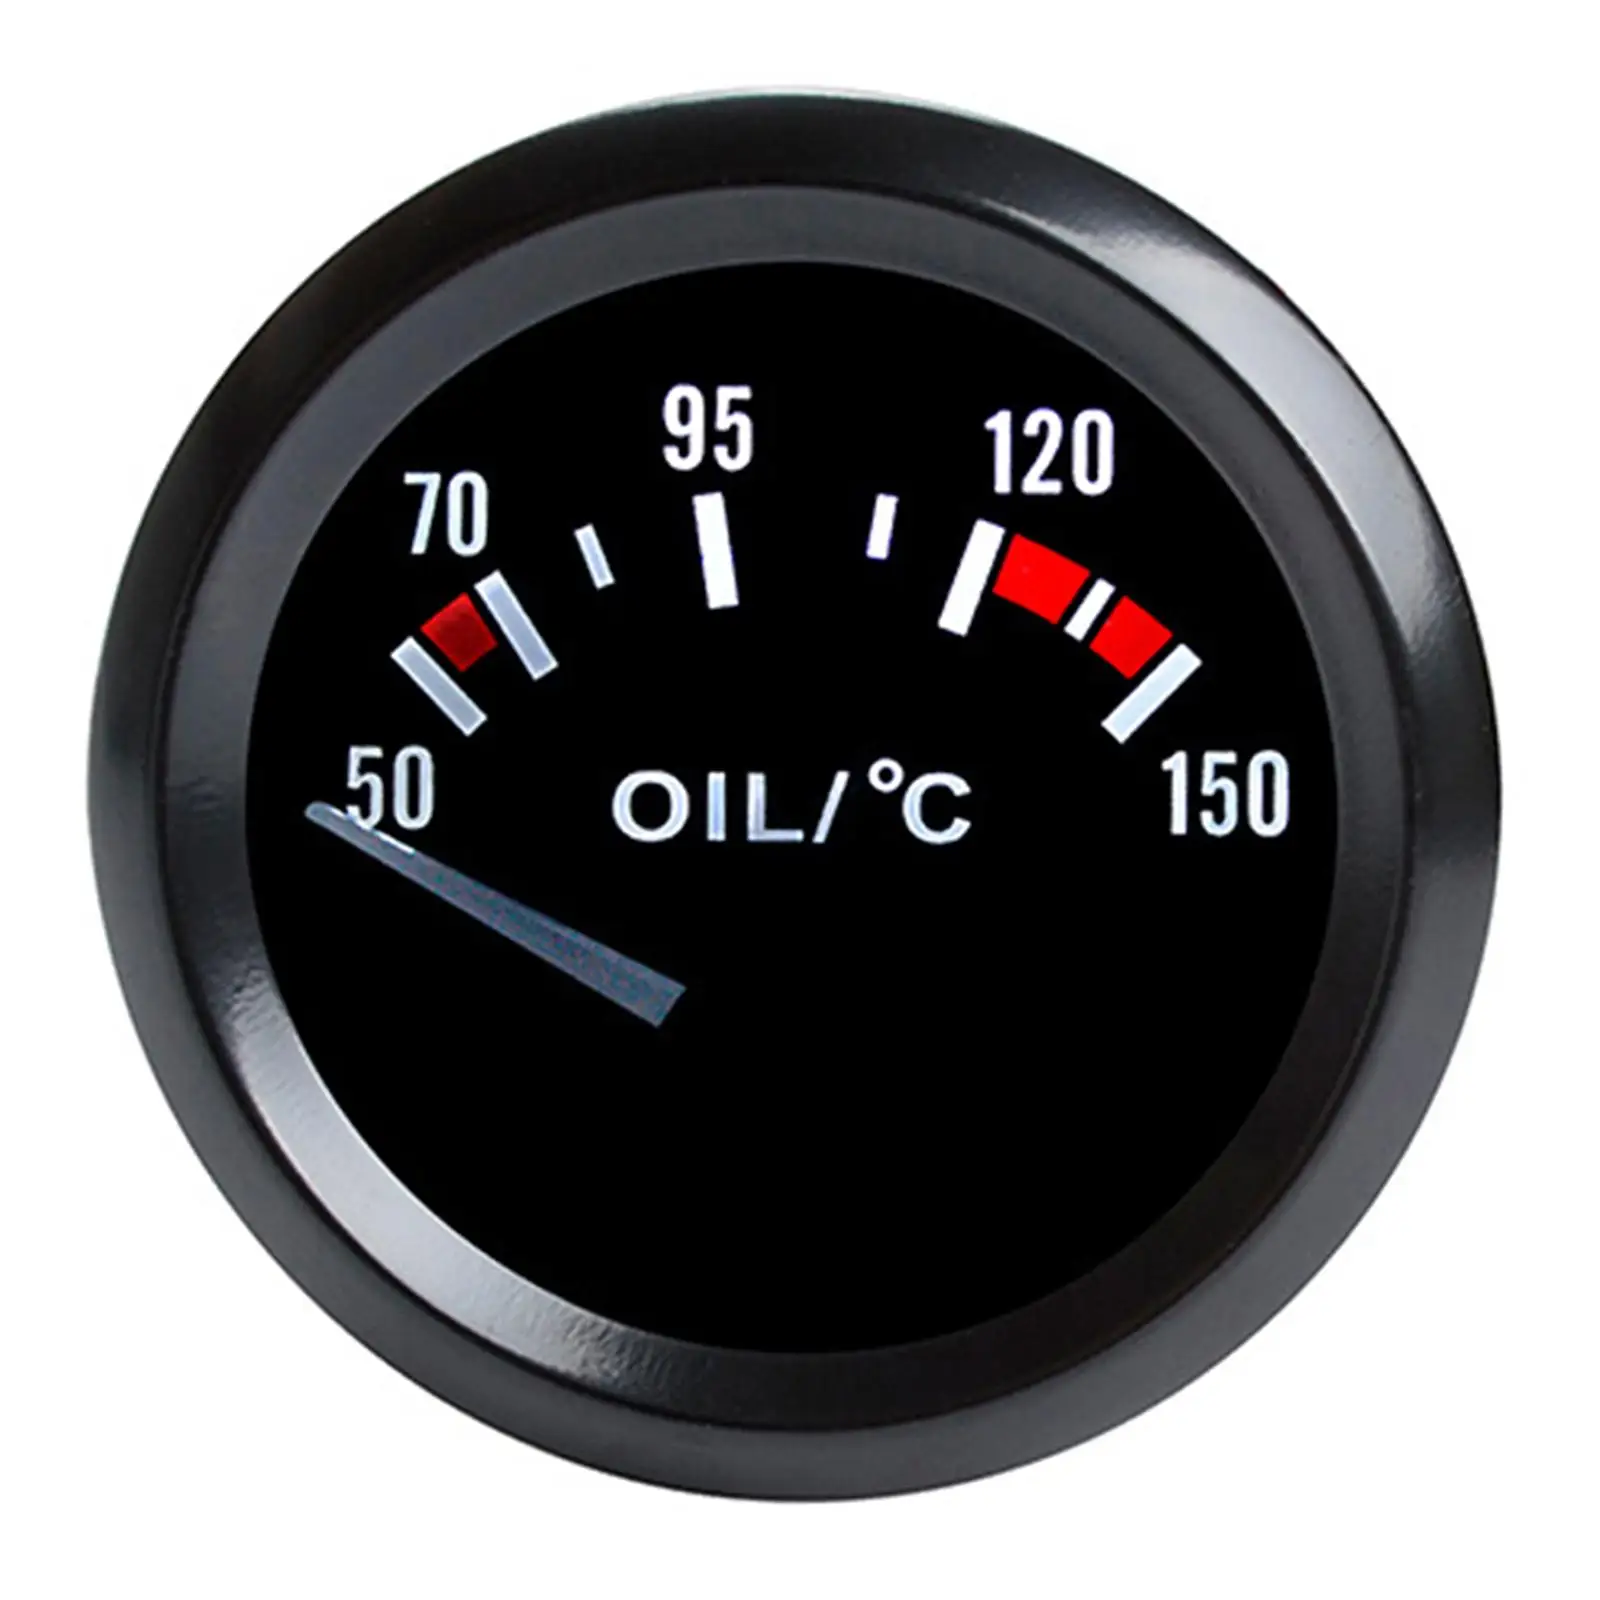 Oil Temp Gauge Car Accessories 2 inch High Performance Replaces Oil Temperature Gauge Car Oil Temp Gauge Meter 52mm for Car